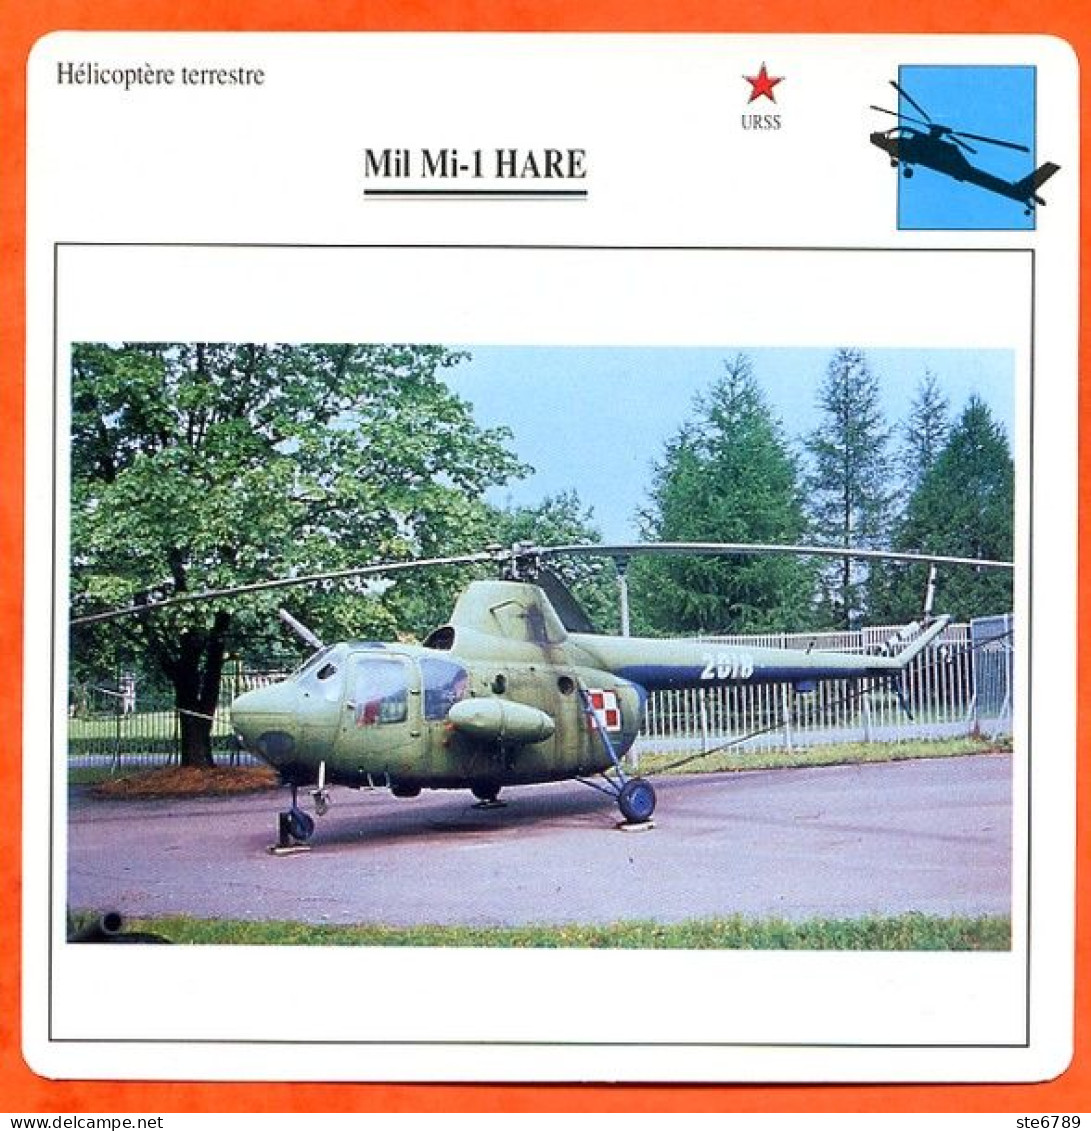 Fiche Aviation Mil Mi 1 HARE / Hélicoptère Terrestre URSS Avions - Aviones